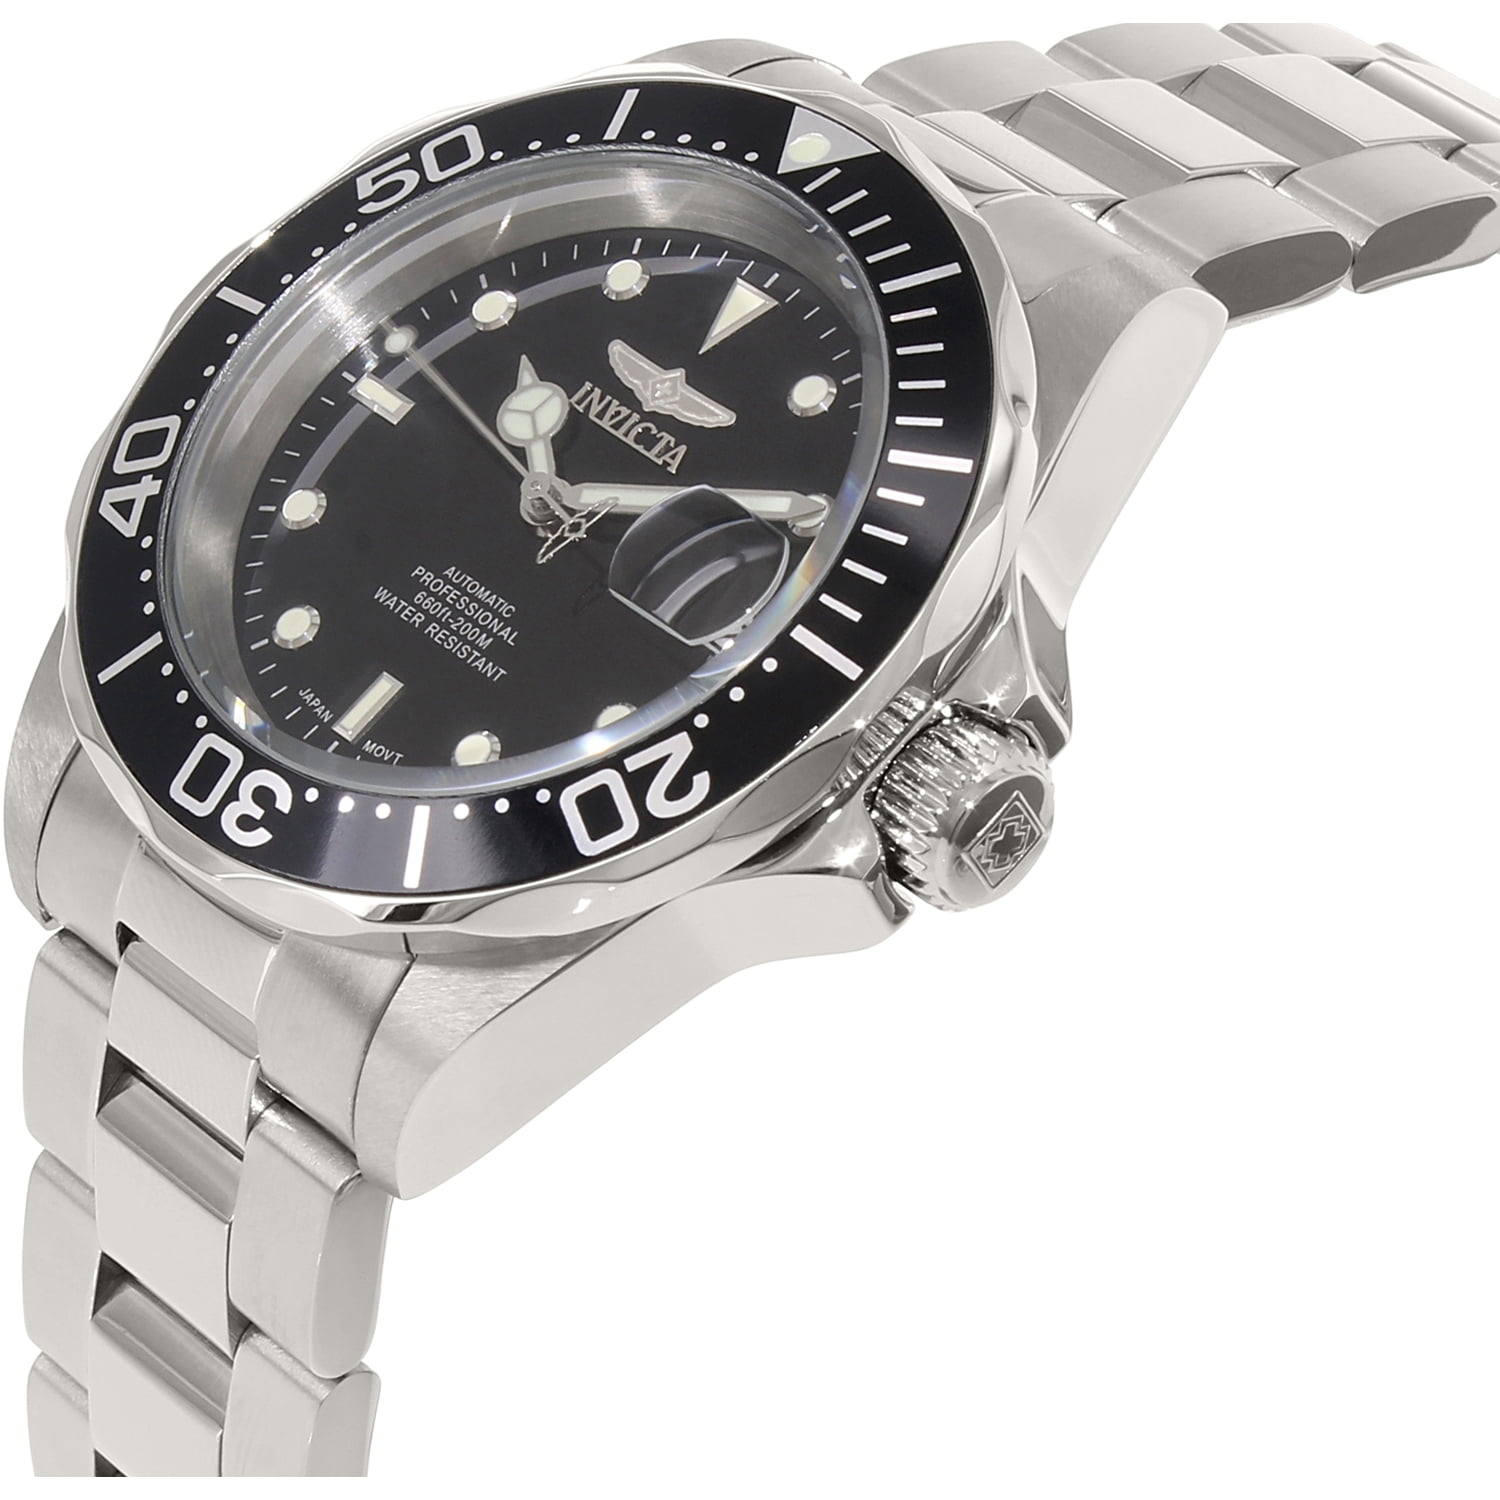 Invicta Men's  Pro Diver Automatic 3 Hand Black Dial Watch